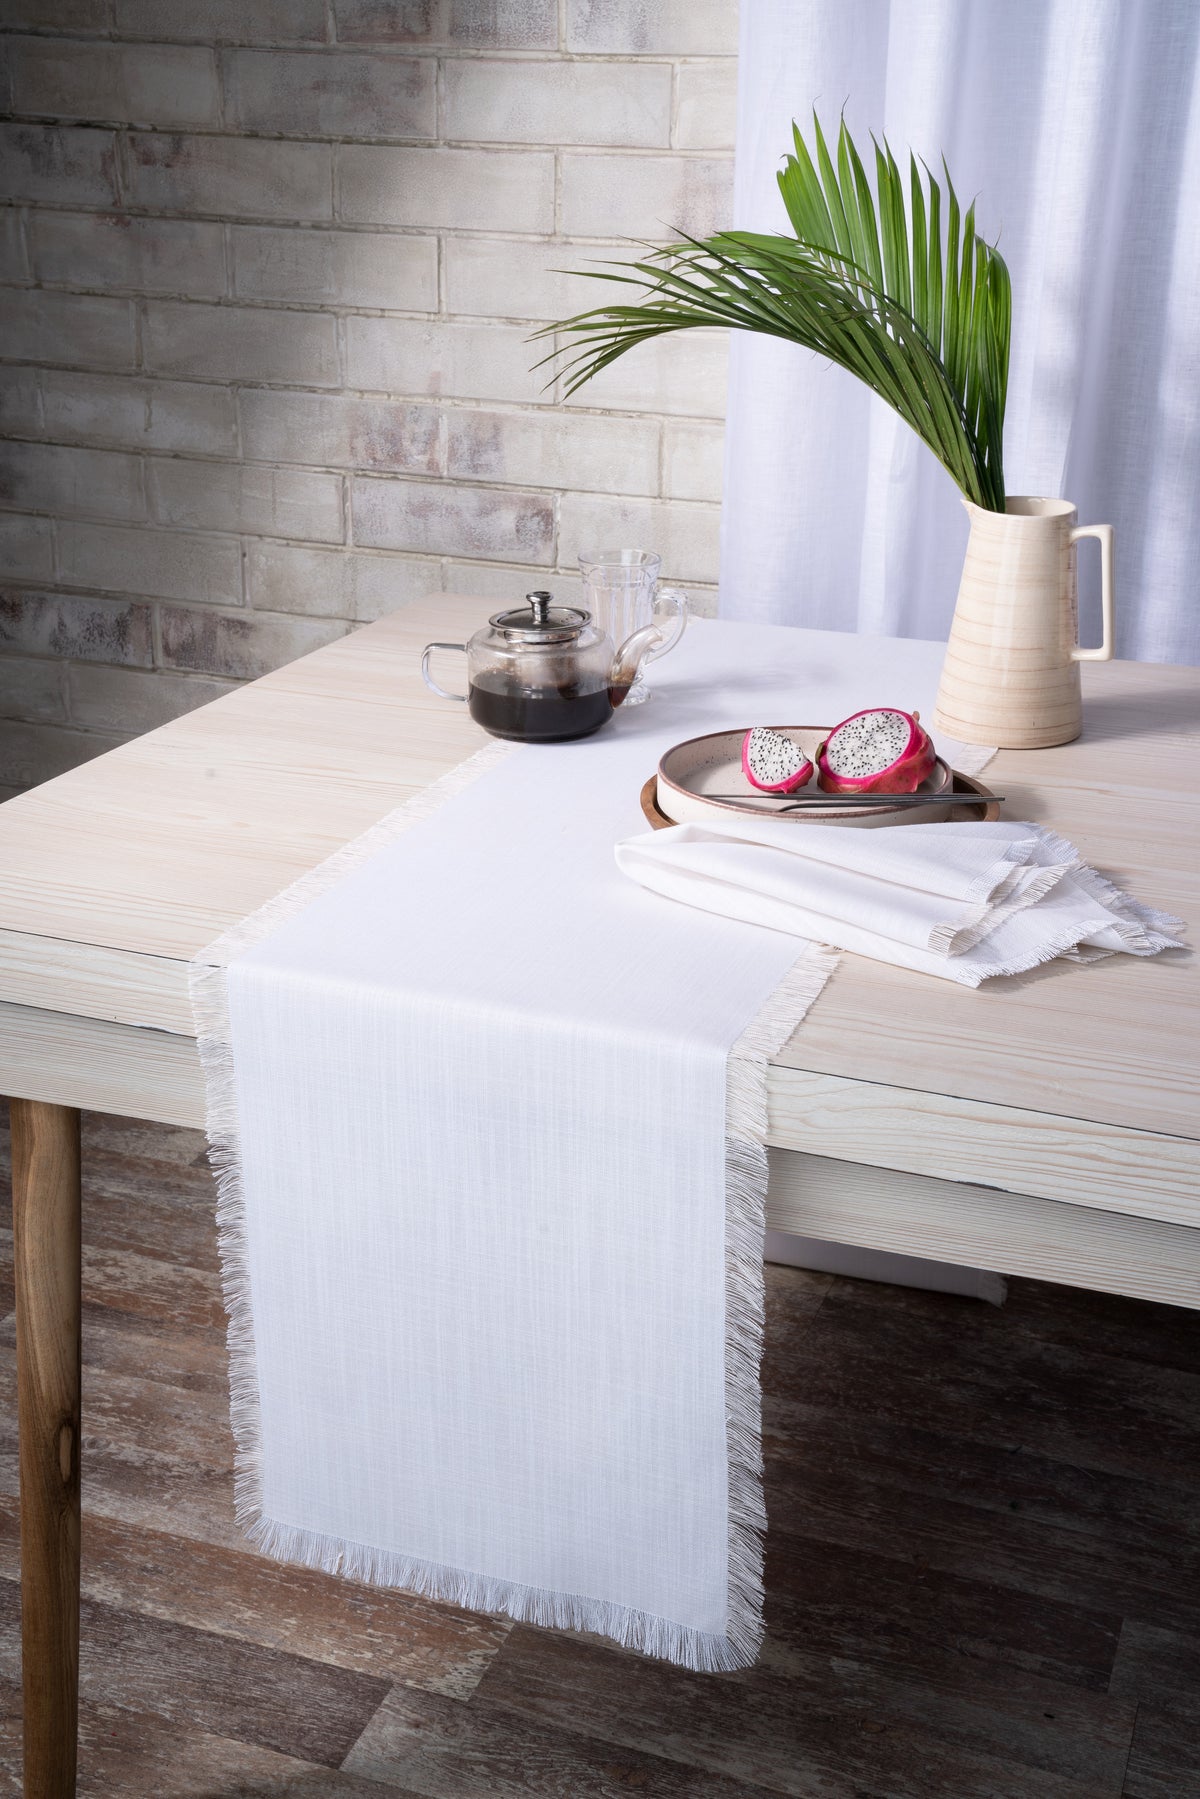 Chambray Cream and White Linen Textured Table Runner - Fringe